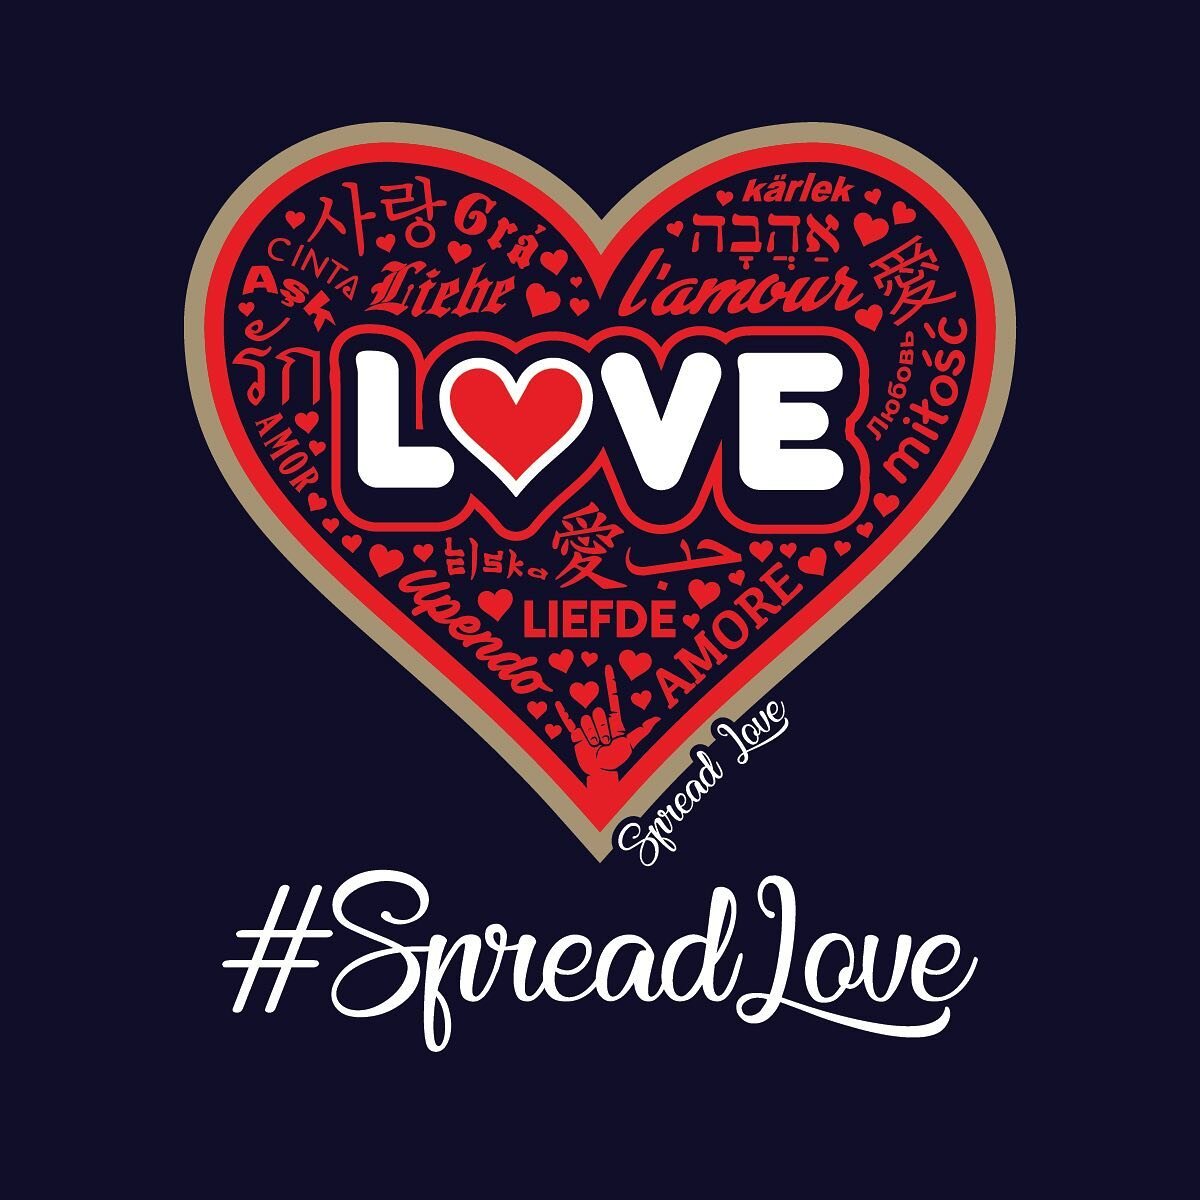 #spreadlove ❤️❤️❤️